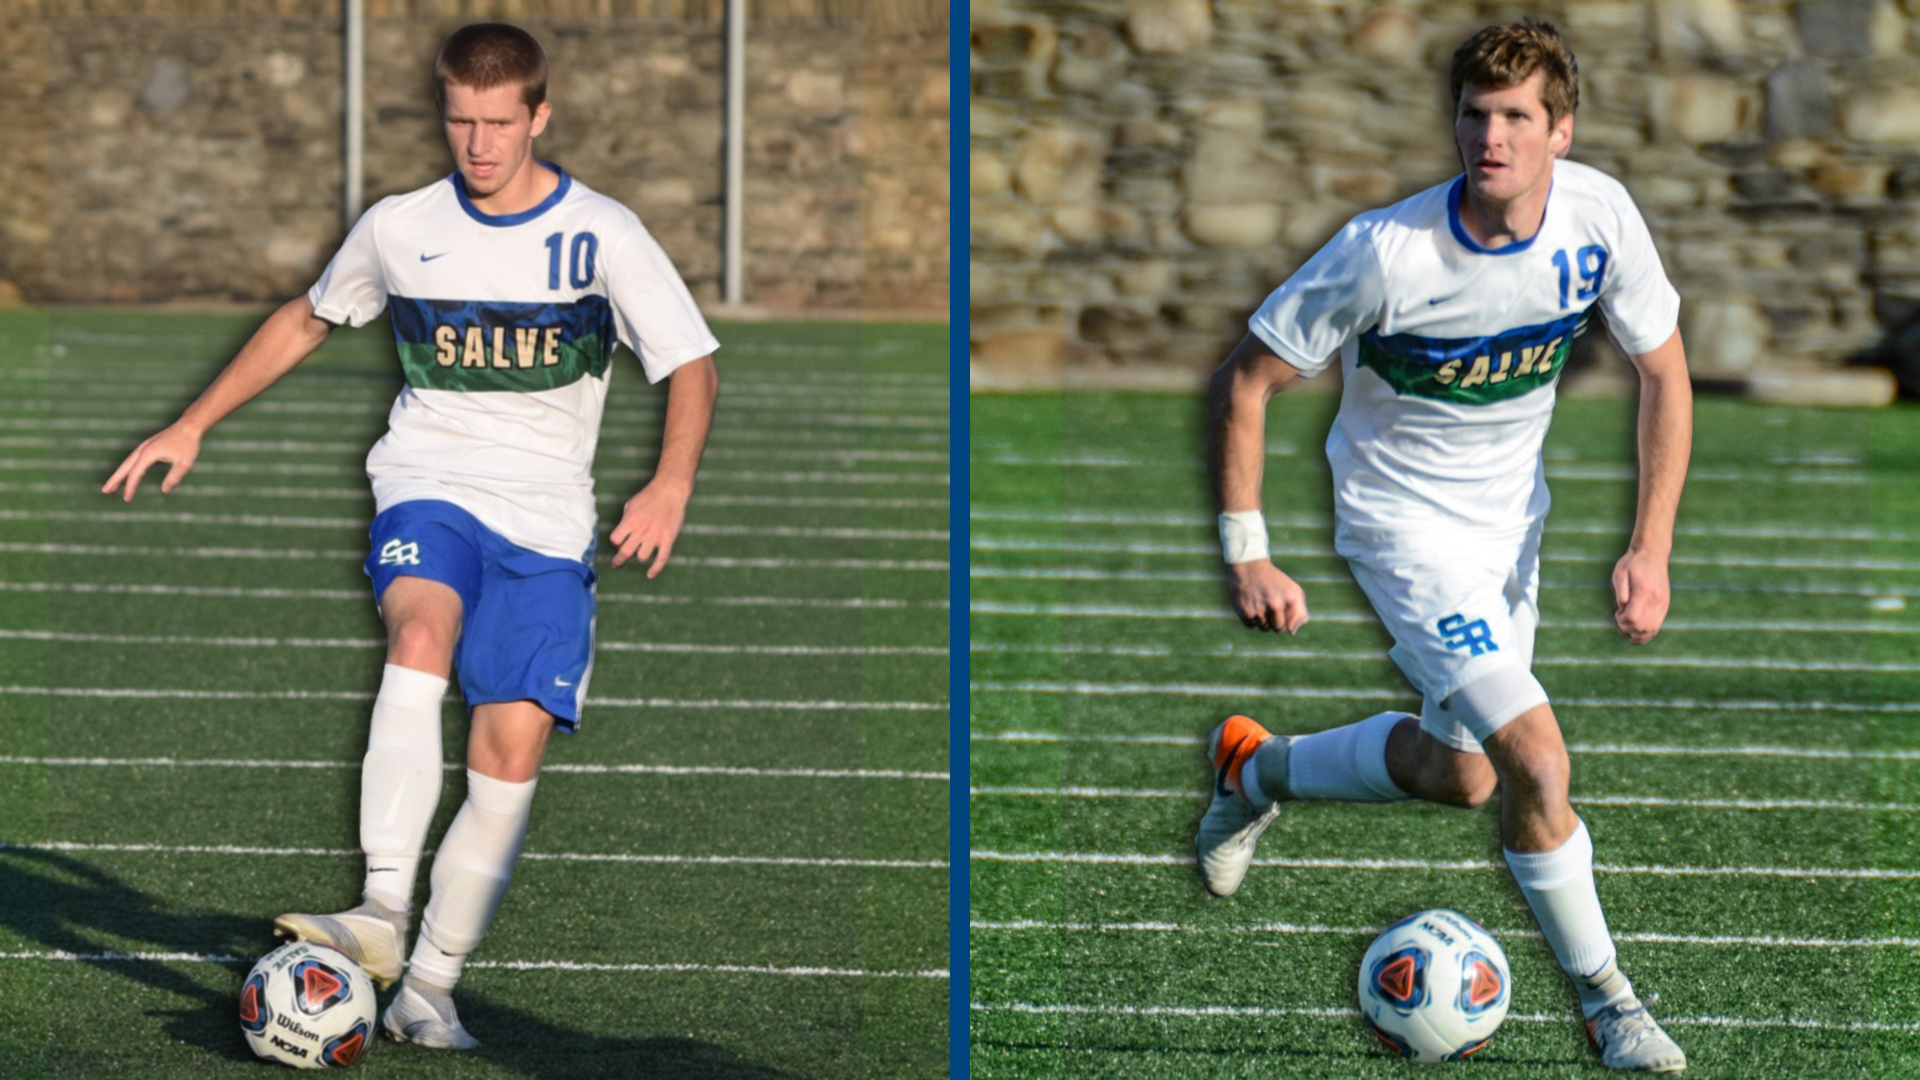 Jacob Guerrra (#10) and Casey Kelly (#19) named captains for Salve Regina men's soccer for the 2020-21 season.